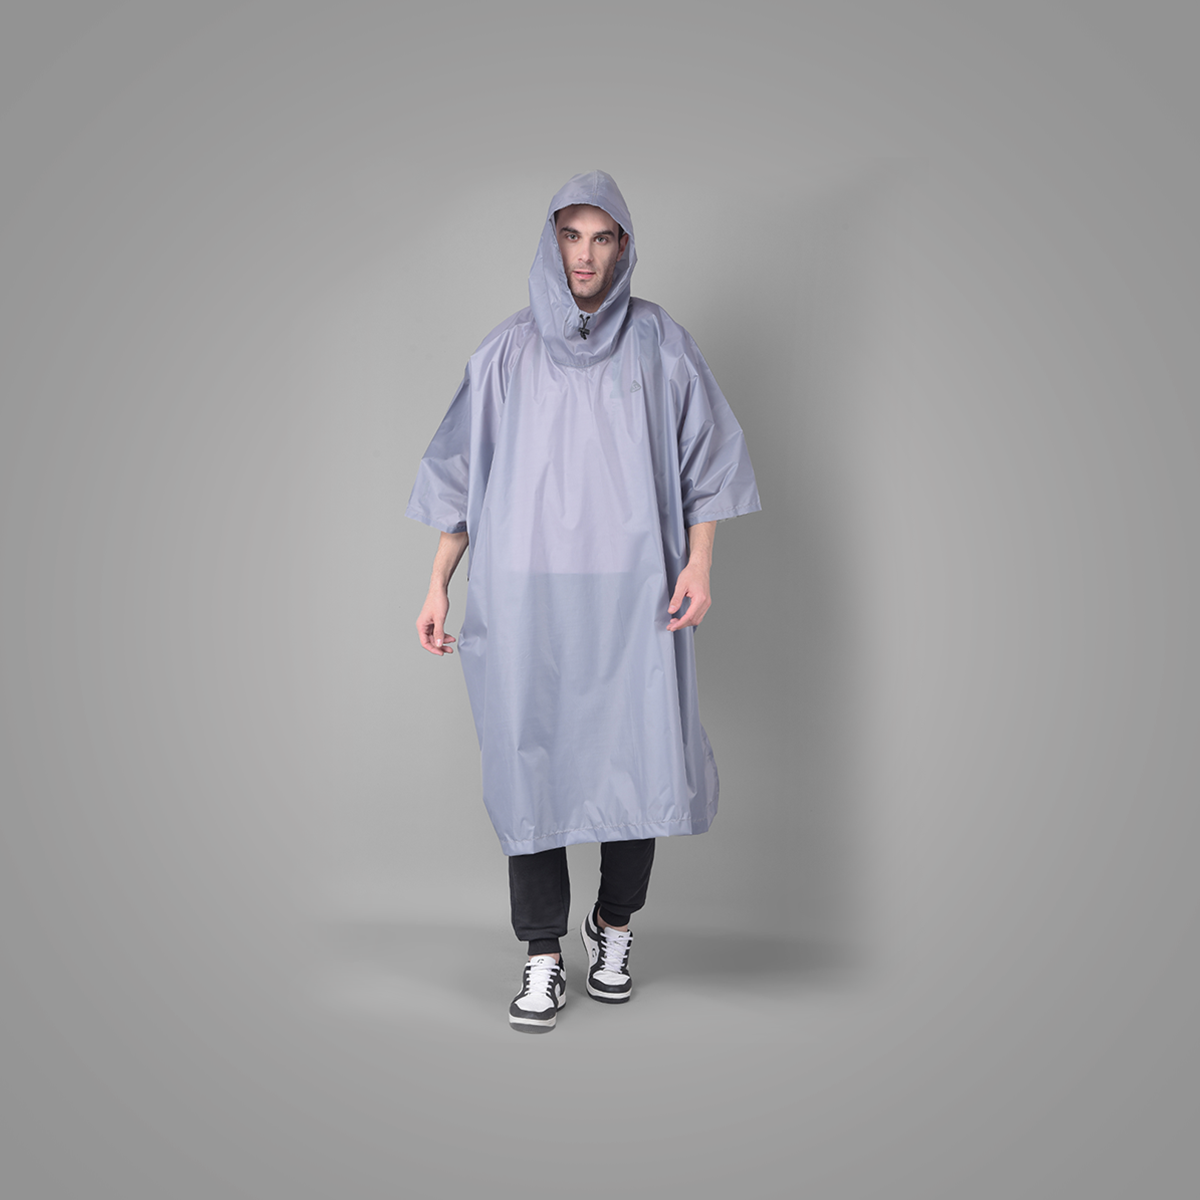 GLOBO Grey Unisex Outdoor Lightweight Rain Poncho for Fashionable Waterproof Weather Protection - Large, Grey